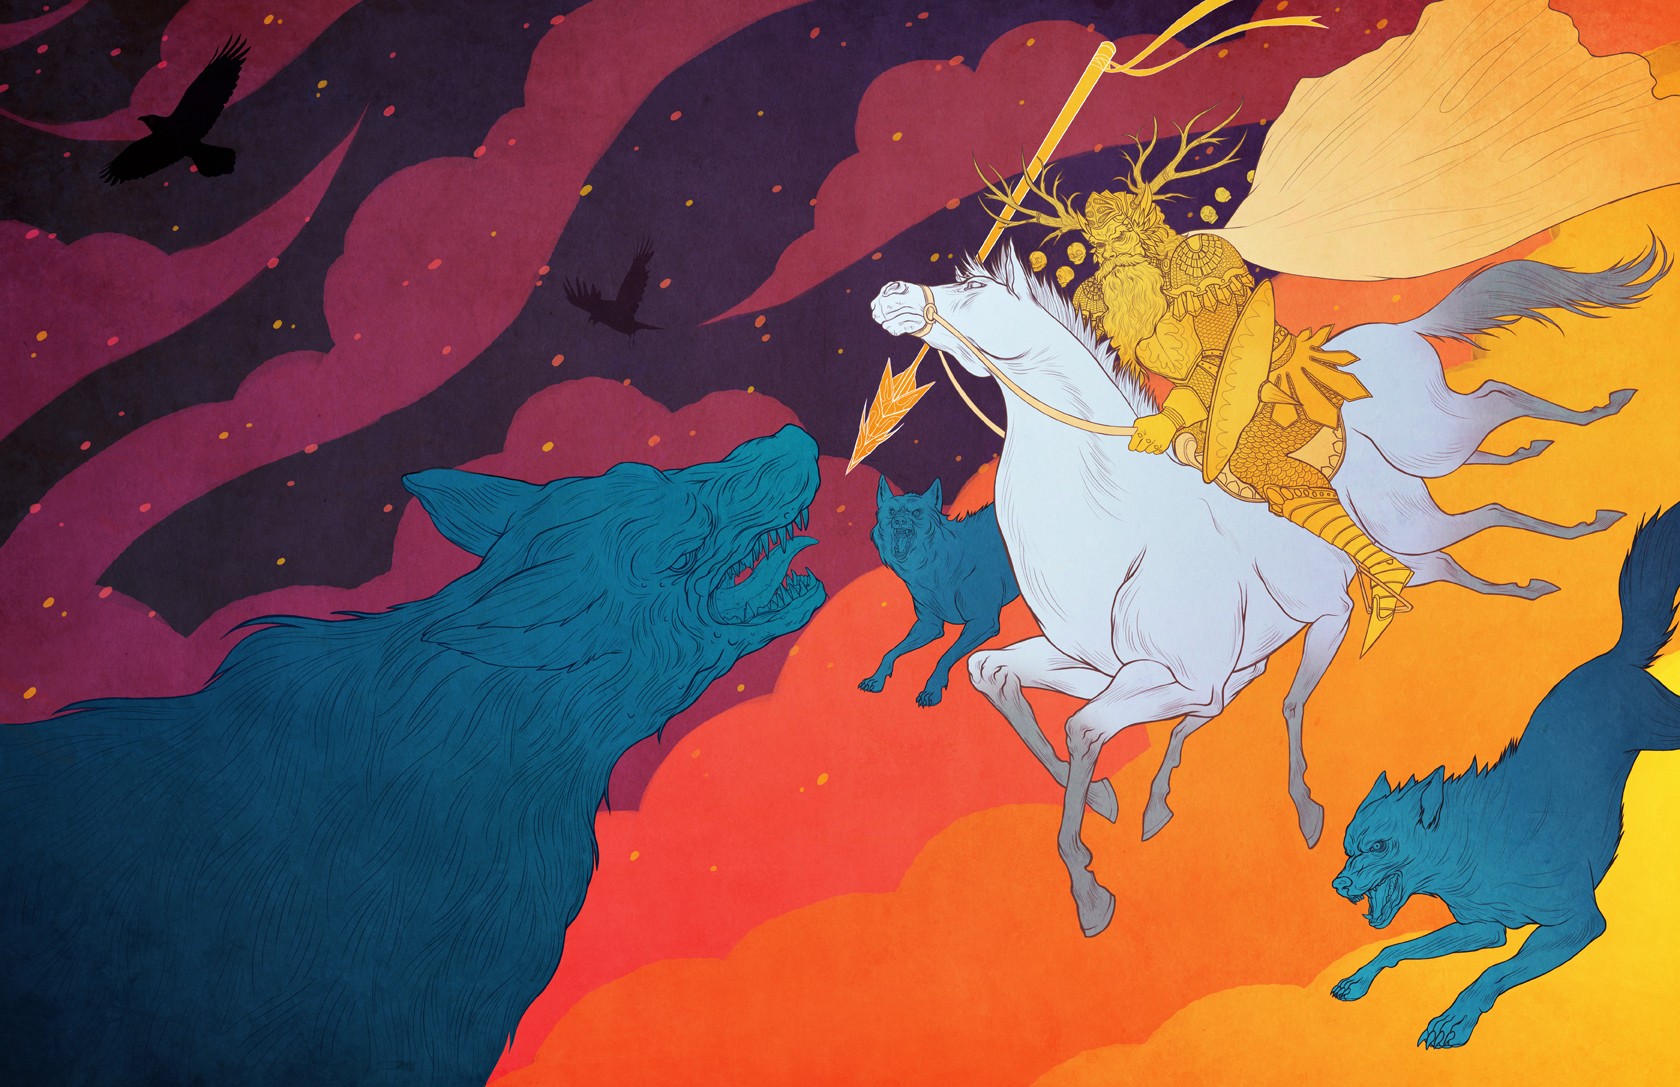 General 1680x1087 mythology wolf clouds horse Odin Huginn Muninn Sleipnir Fenris Gungnir horse riding colorful myth fantasy art artwork